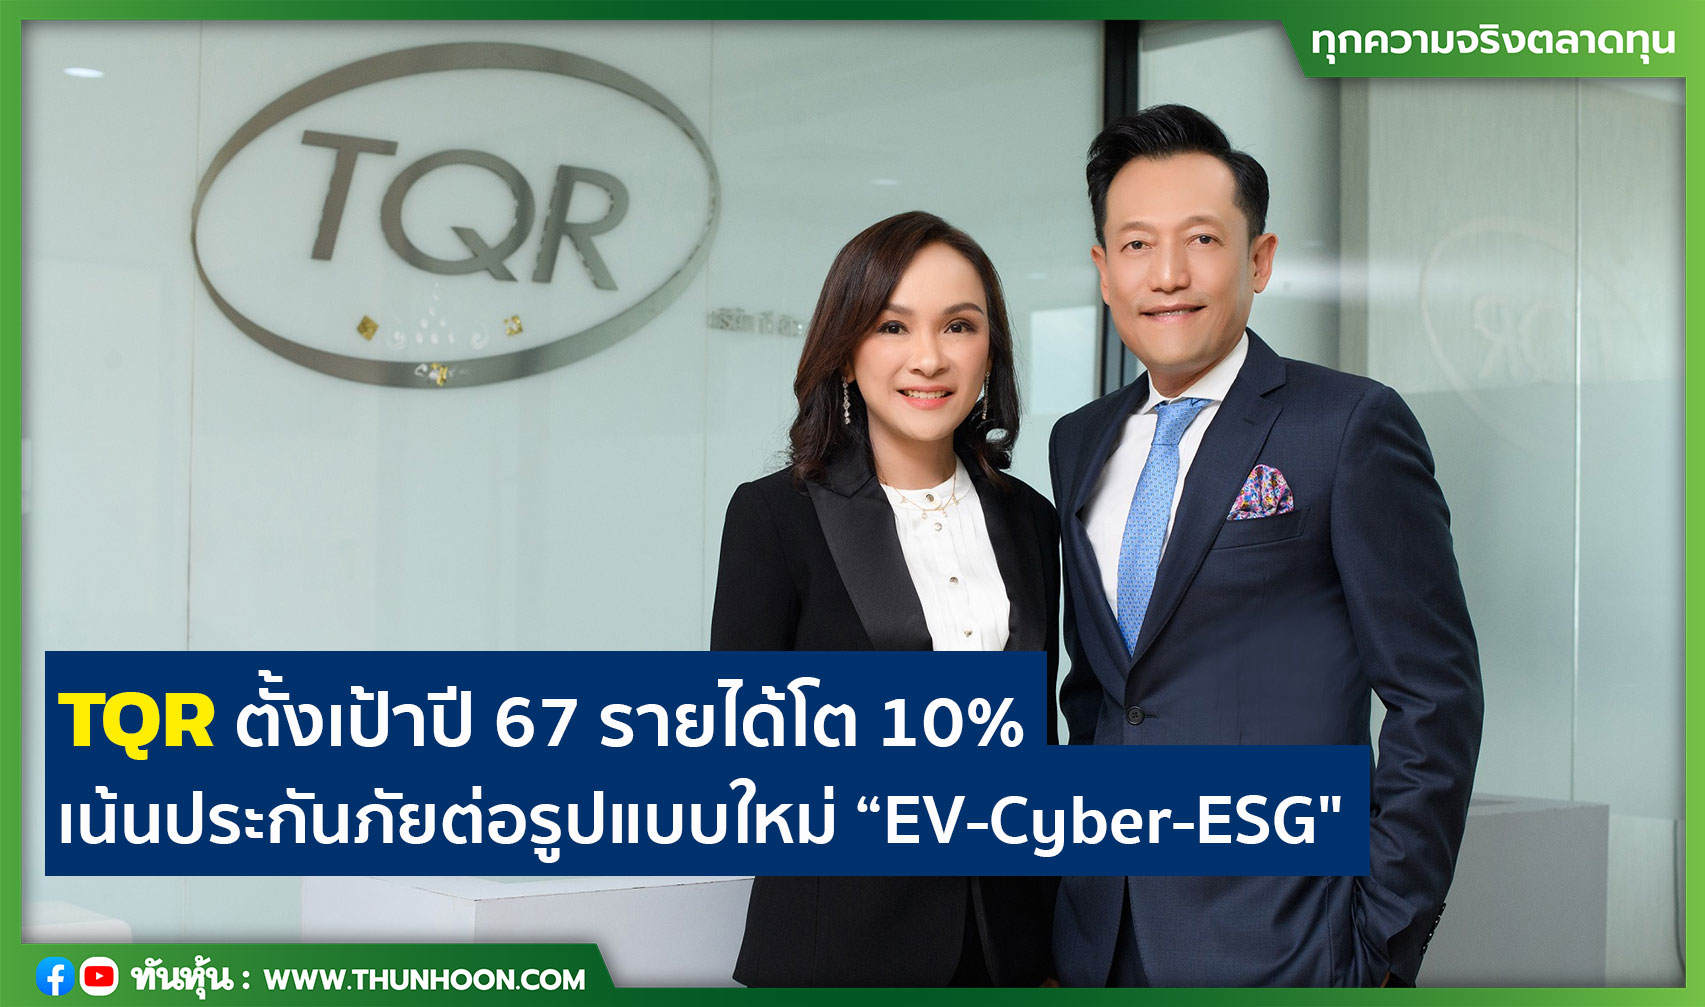 TQR ตั้งเป้าปี 67 รายได้โต 10% เน้นประกันภัยต่อรูปแบบใหม่ “EV-Cyber-ESG"